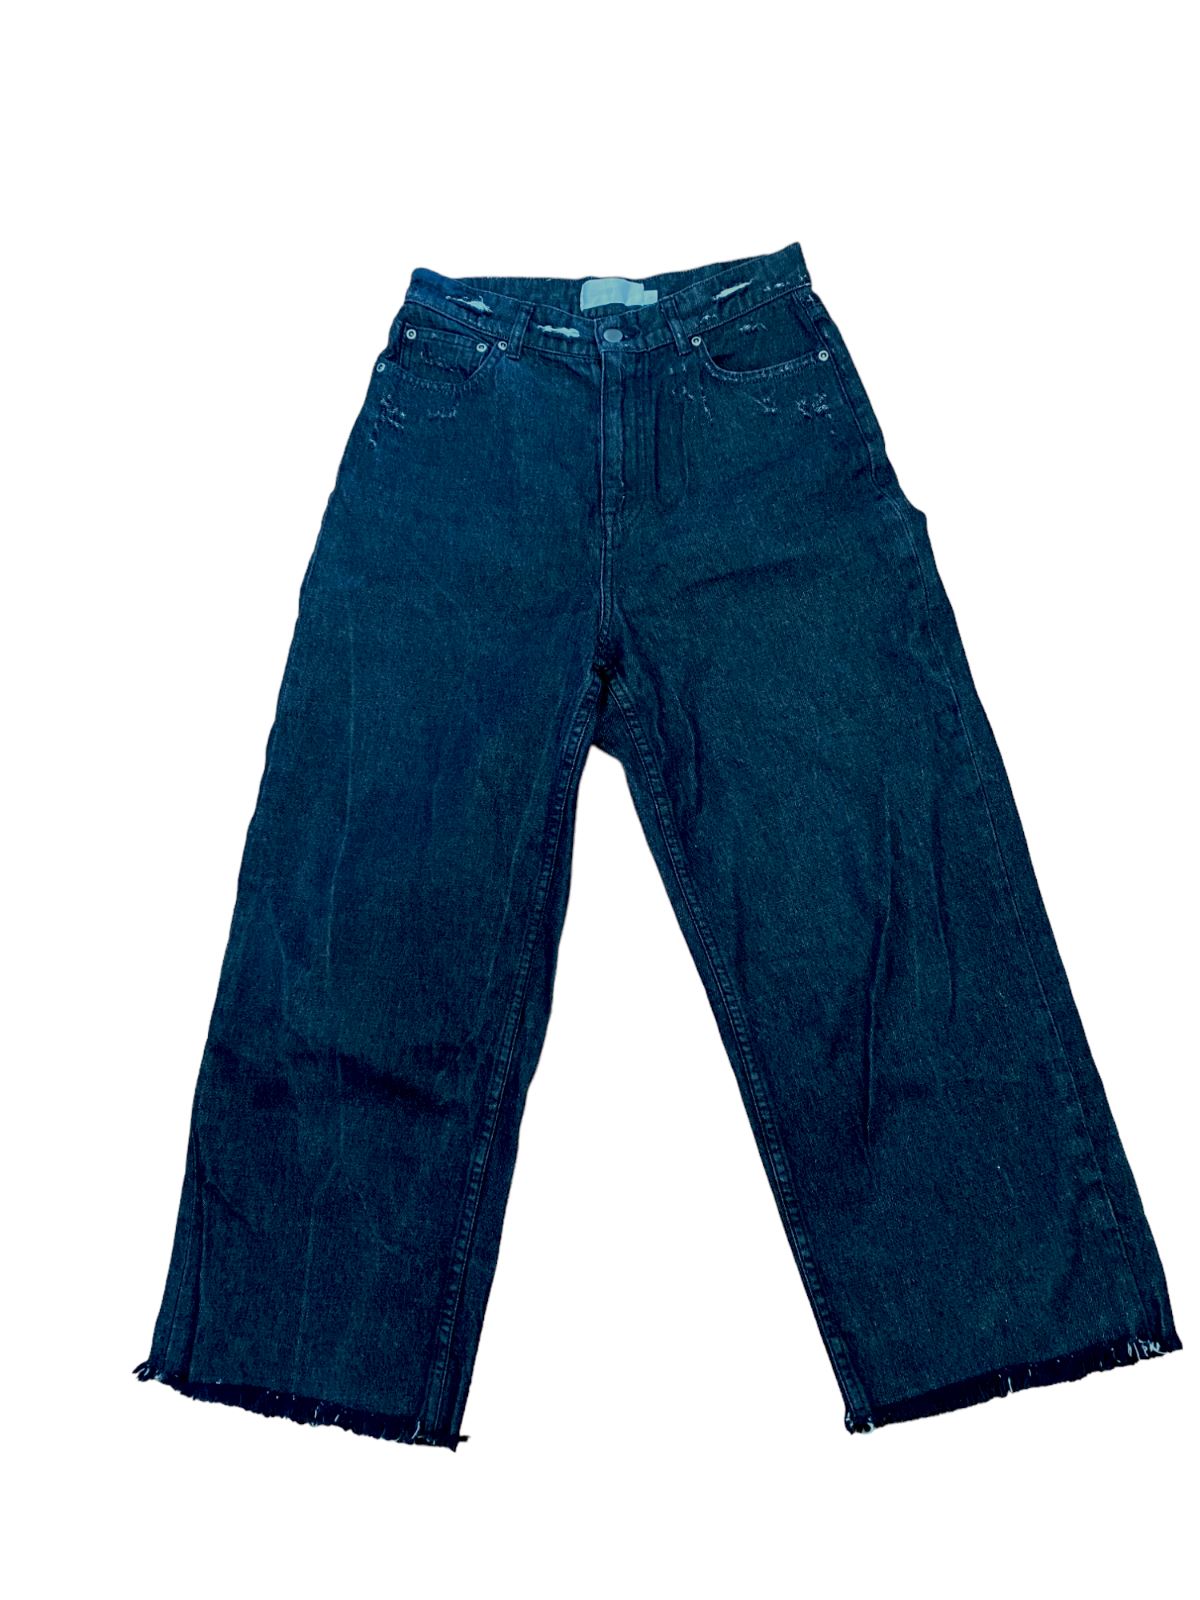 Zimmermann Black Denim Jeans | High Waisted, Wide Leg, Distressed, Cropped, Sz 1